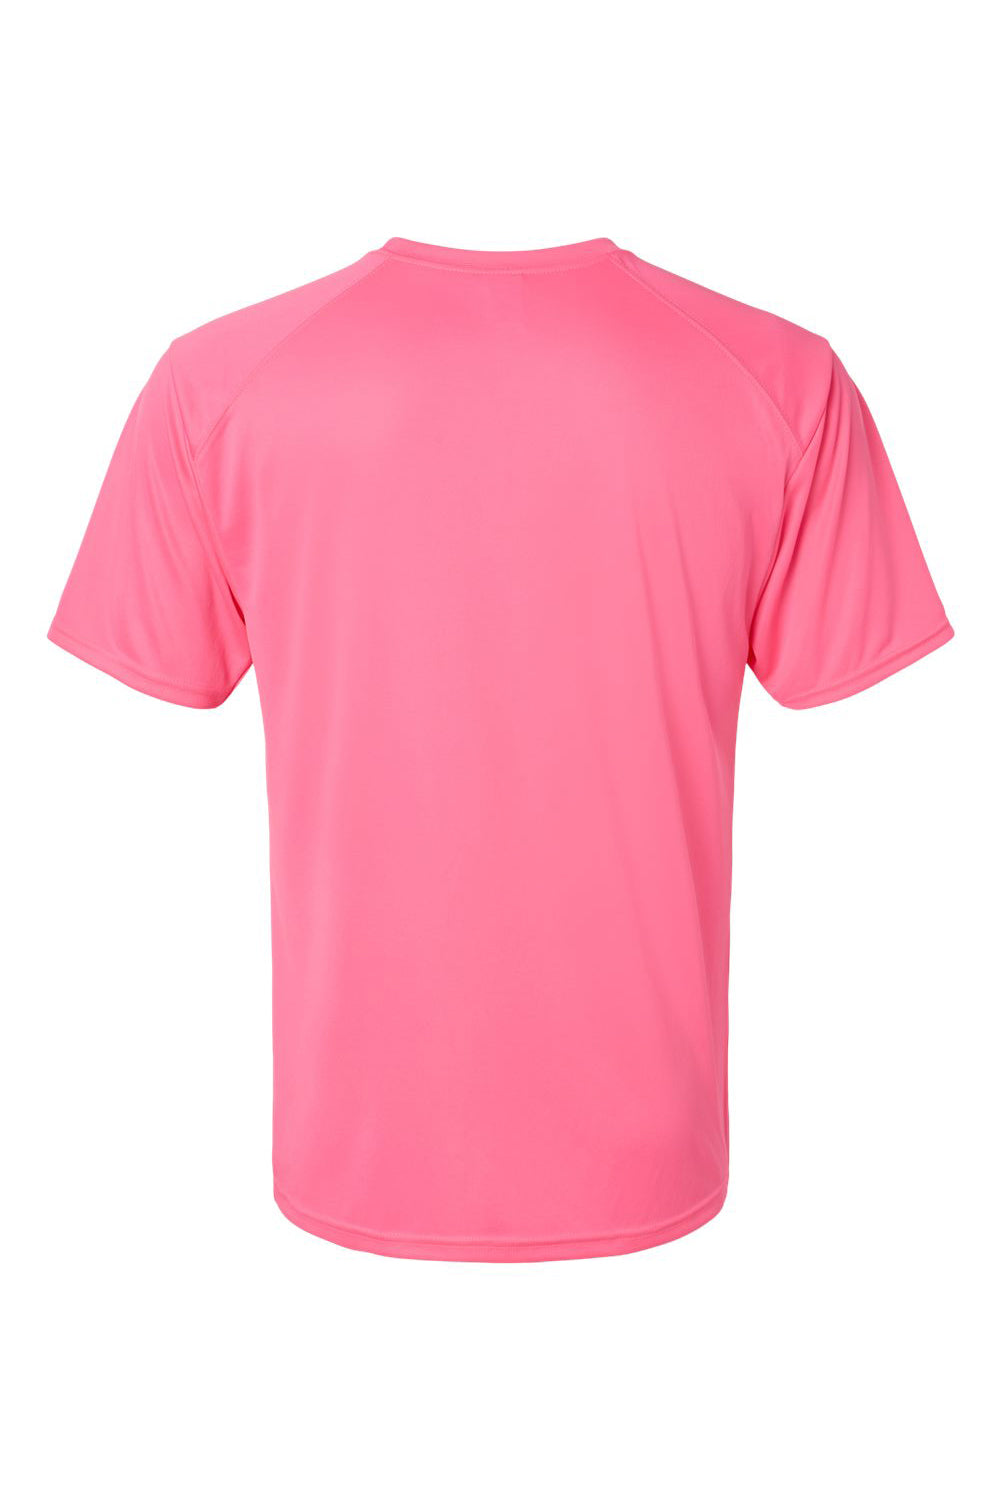 Paragon 200 Mens Islander Performance Short Sleeve Crewneck T-Shirt Neon Pink Flat Back